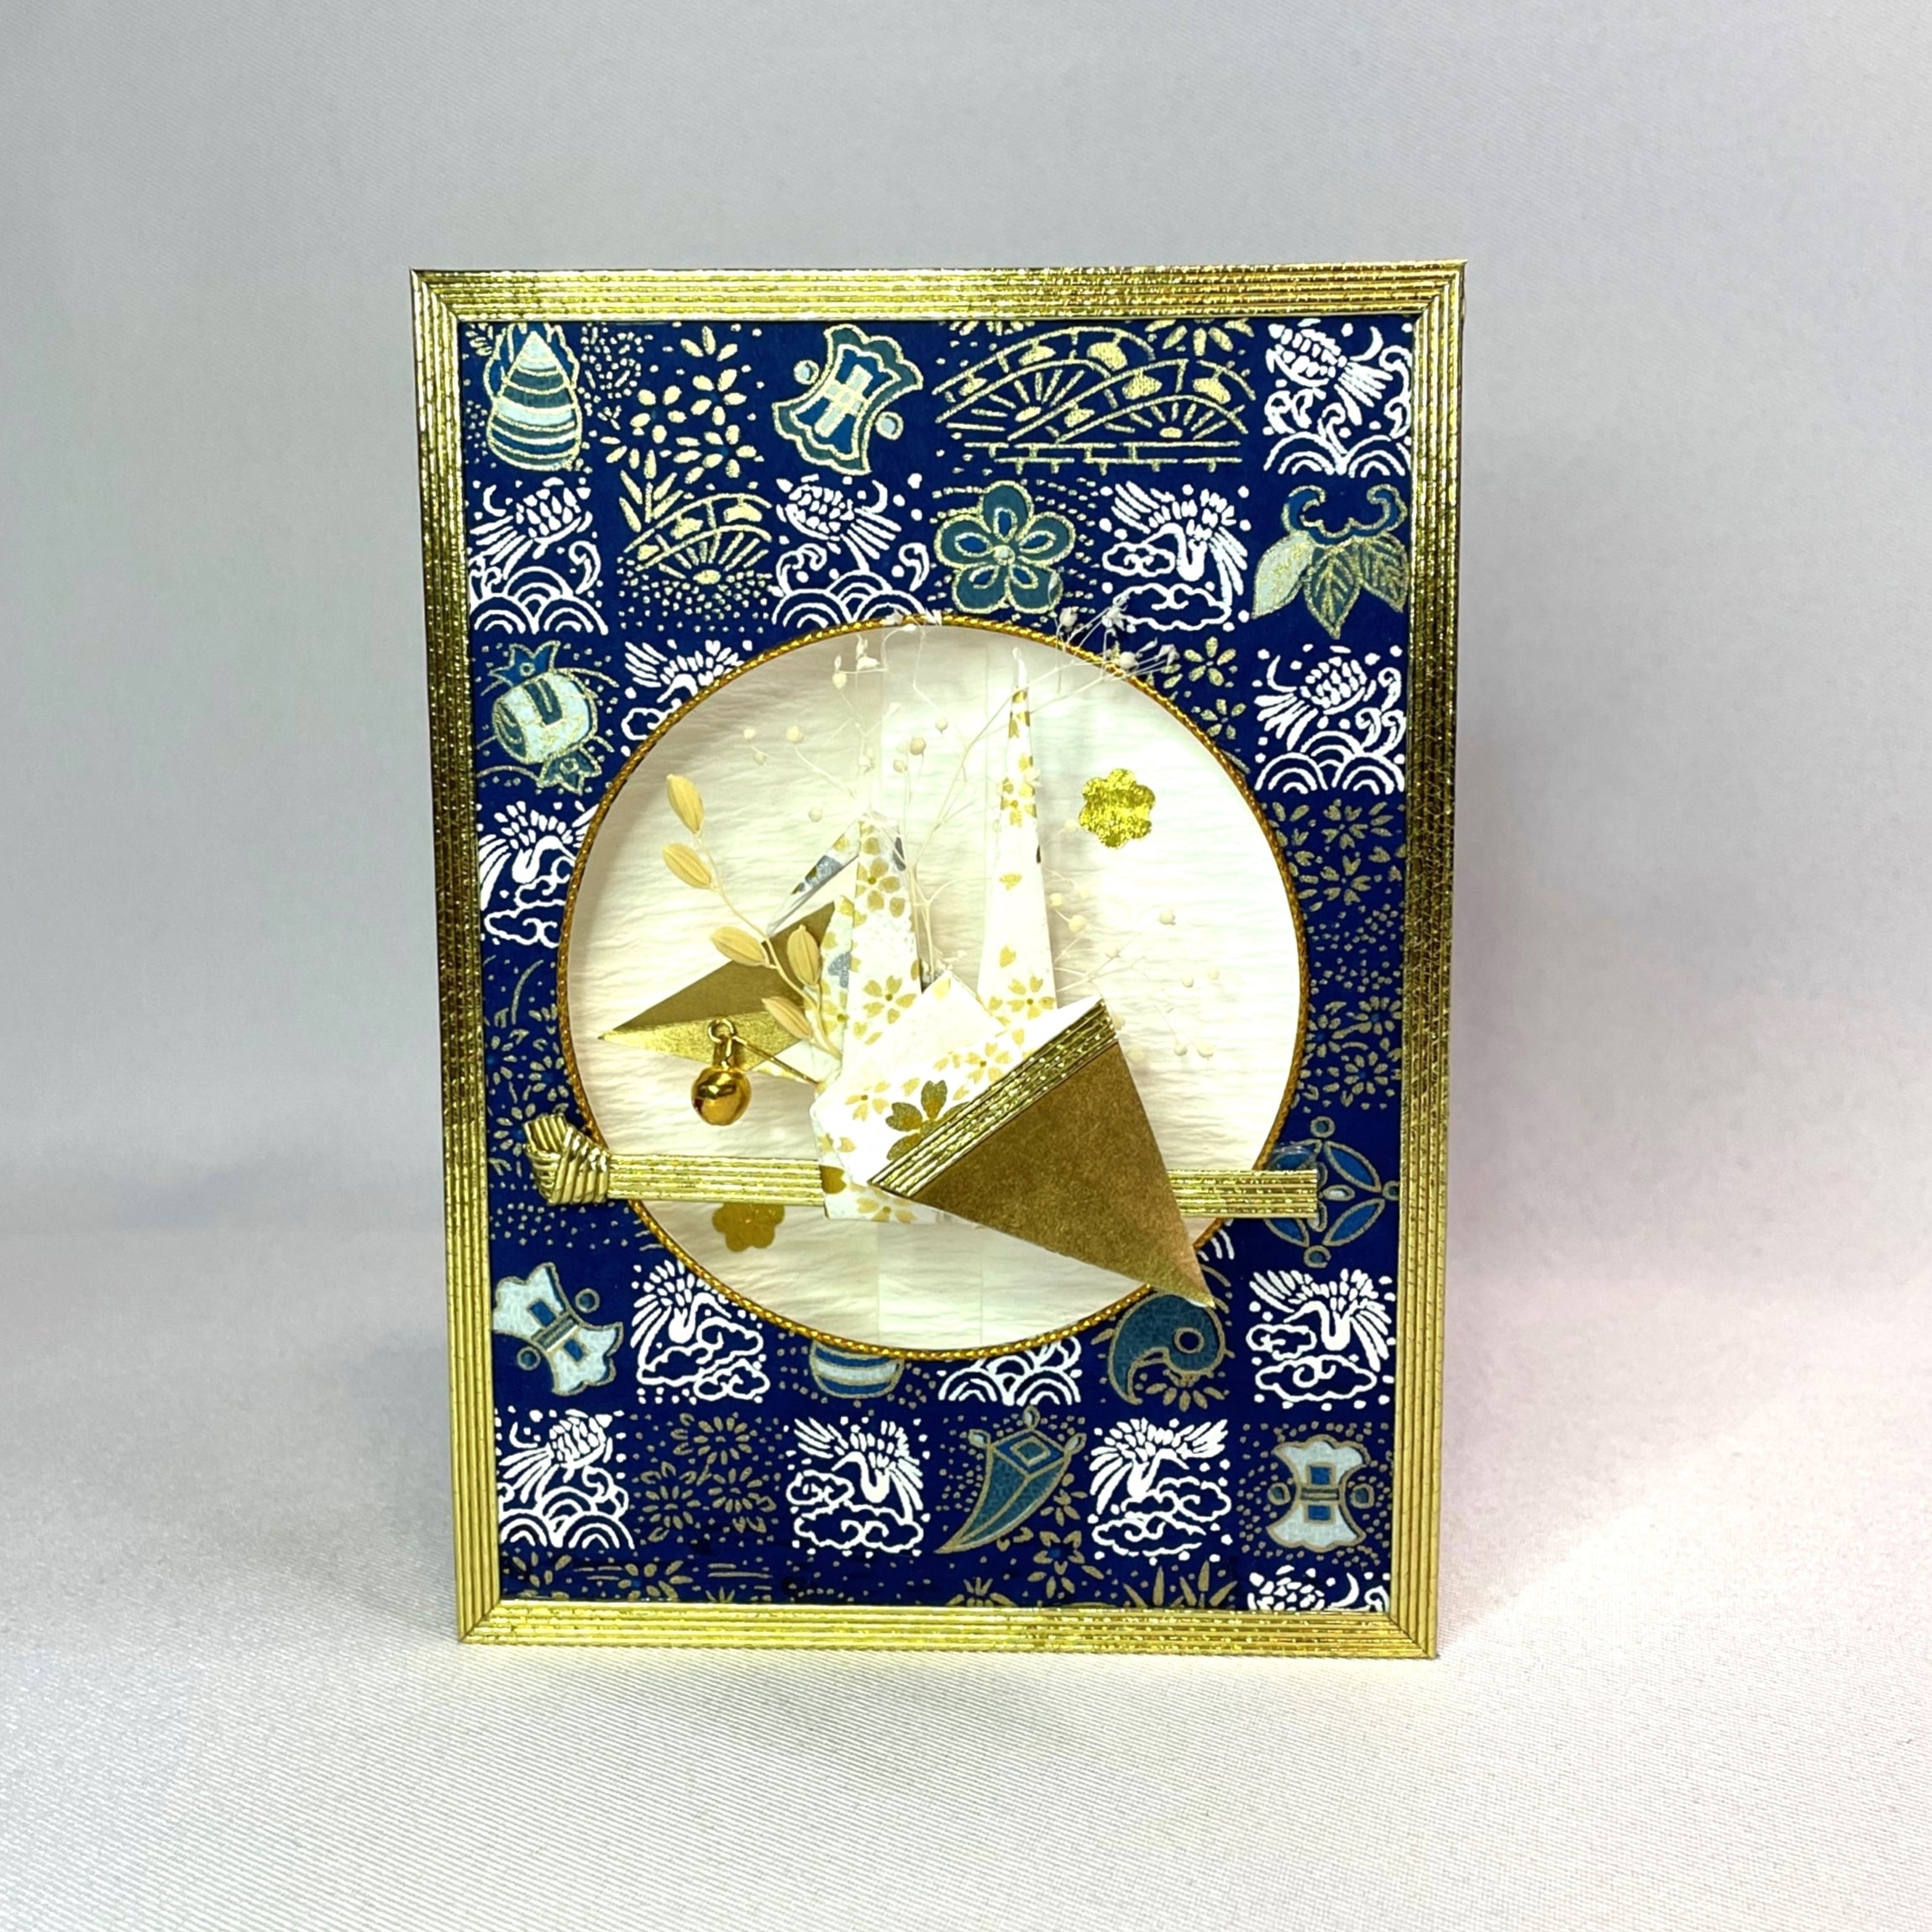 Handmade Greeting Card "Crane & Traditional Design"